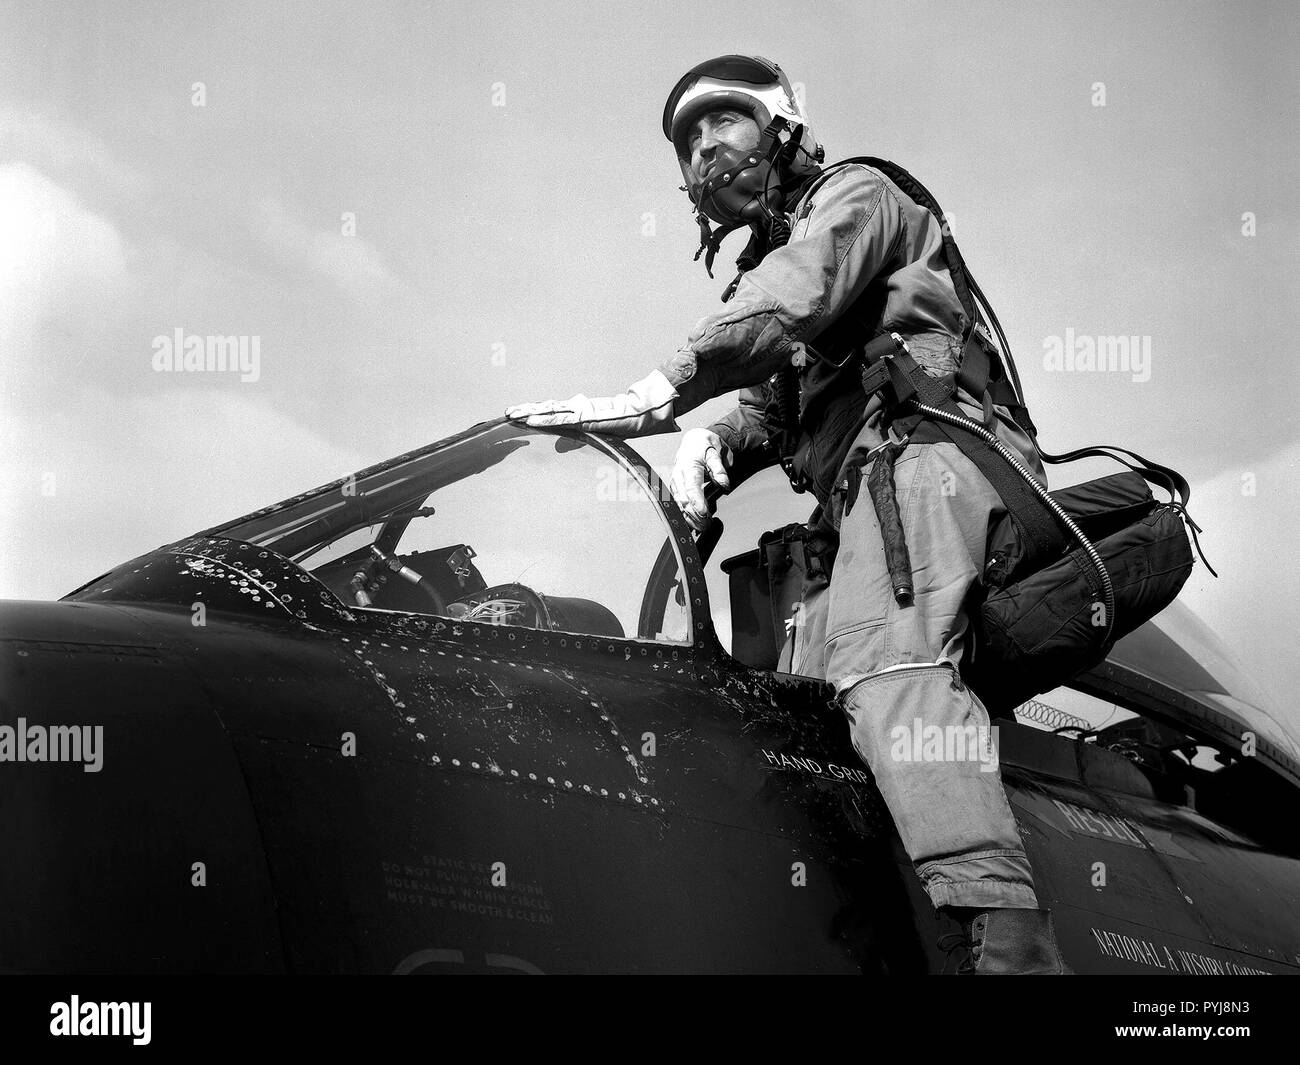 Pilot Joe Algranti climbs into the cockpit of a McDonnell F2H-2B Banshee on the tarmac at the National Advisory Committee for Aeronautics (NACA) Lewis Flight Propulsion Laboratory. Stock Photo